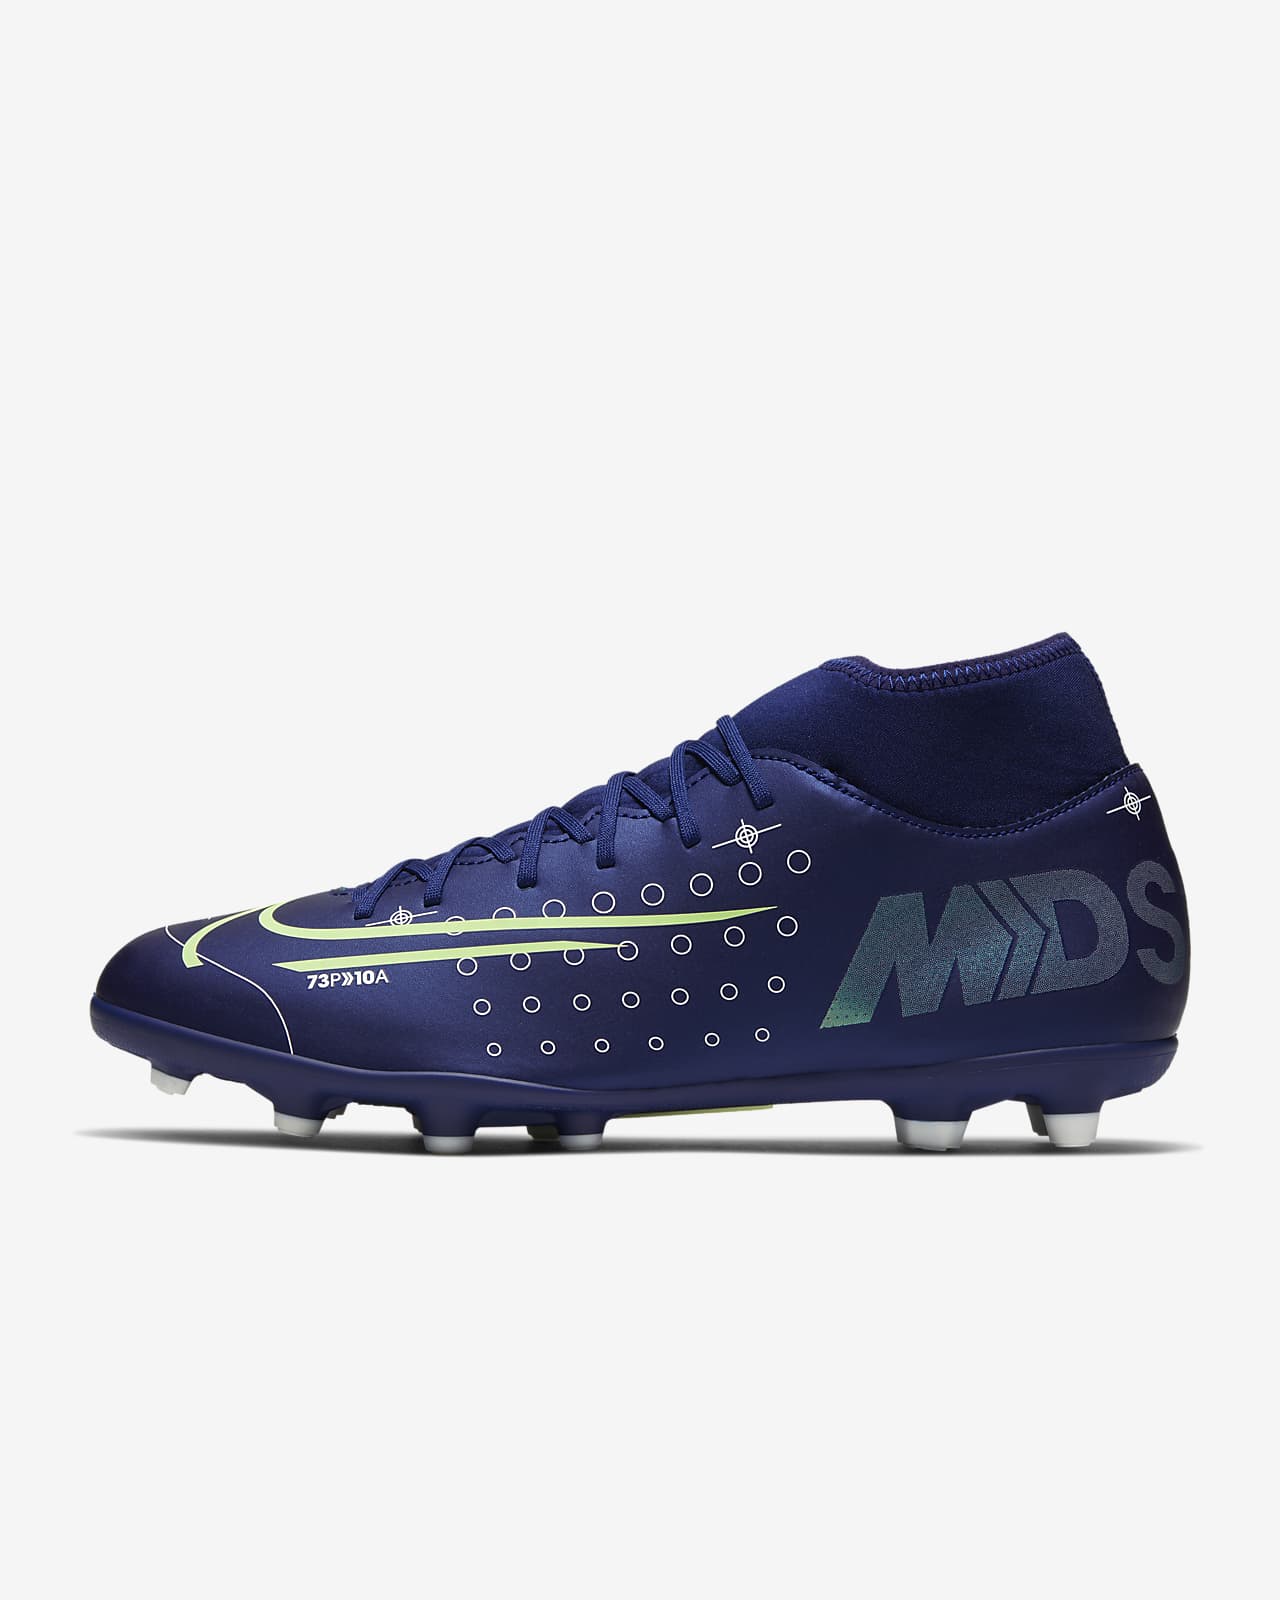 futbol soccer shoes